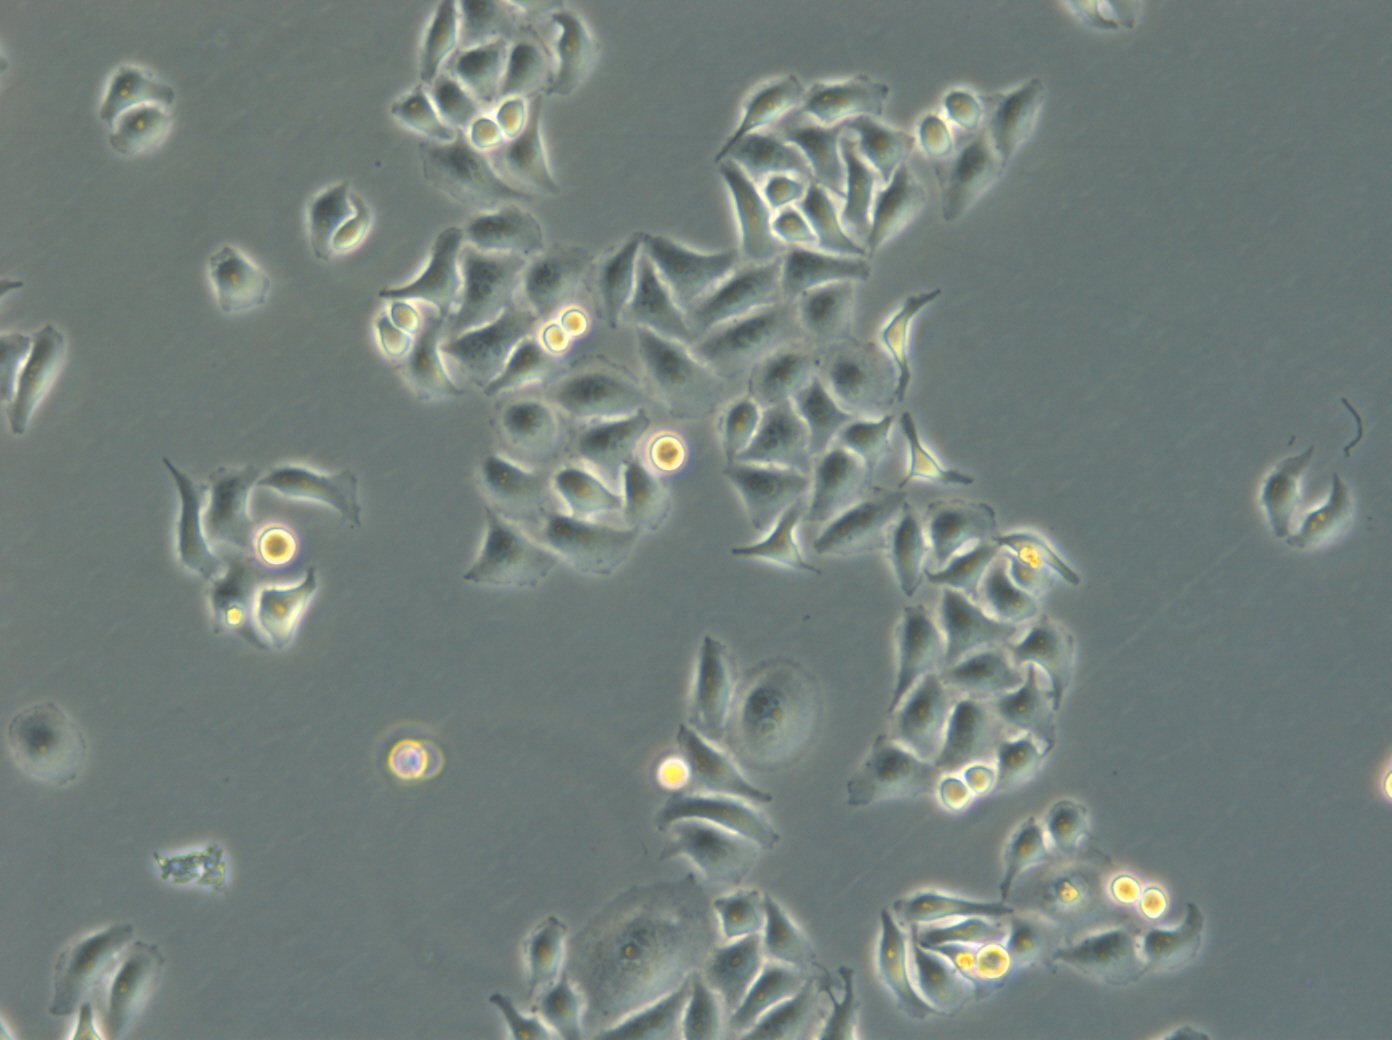 HK EGFP-LaminB1/H2B-mCherry Cells